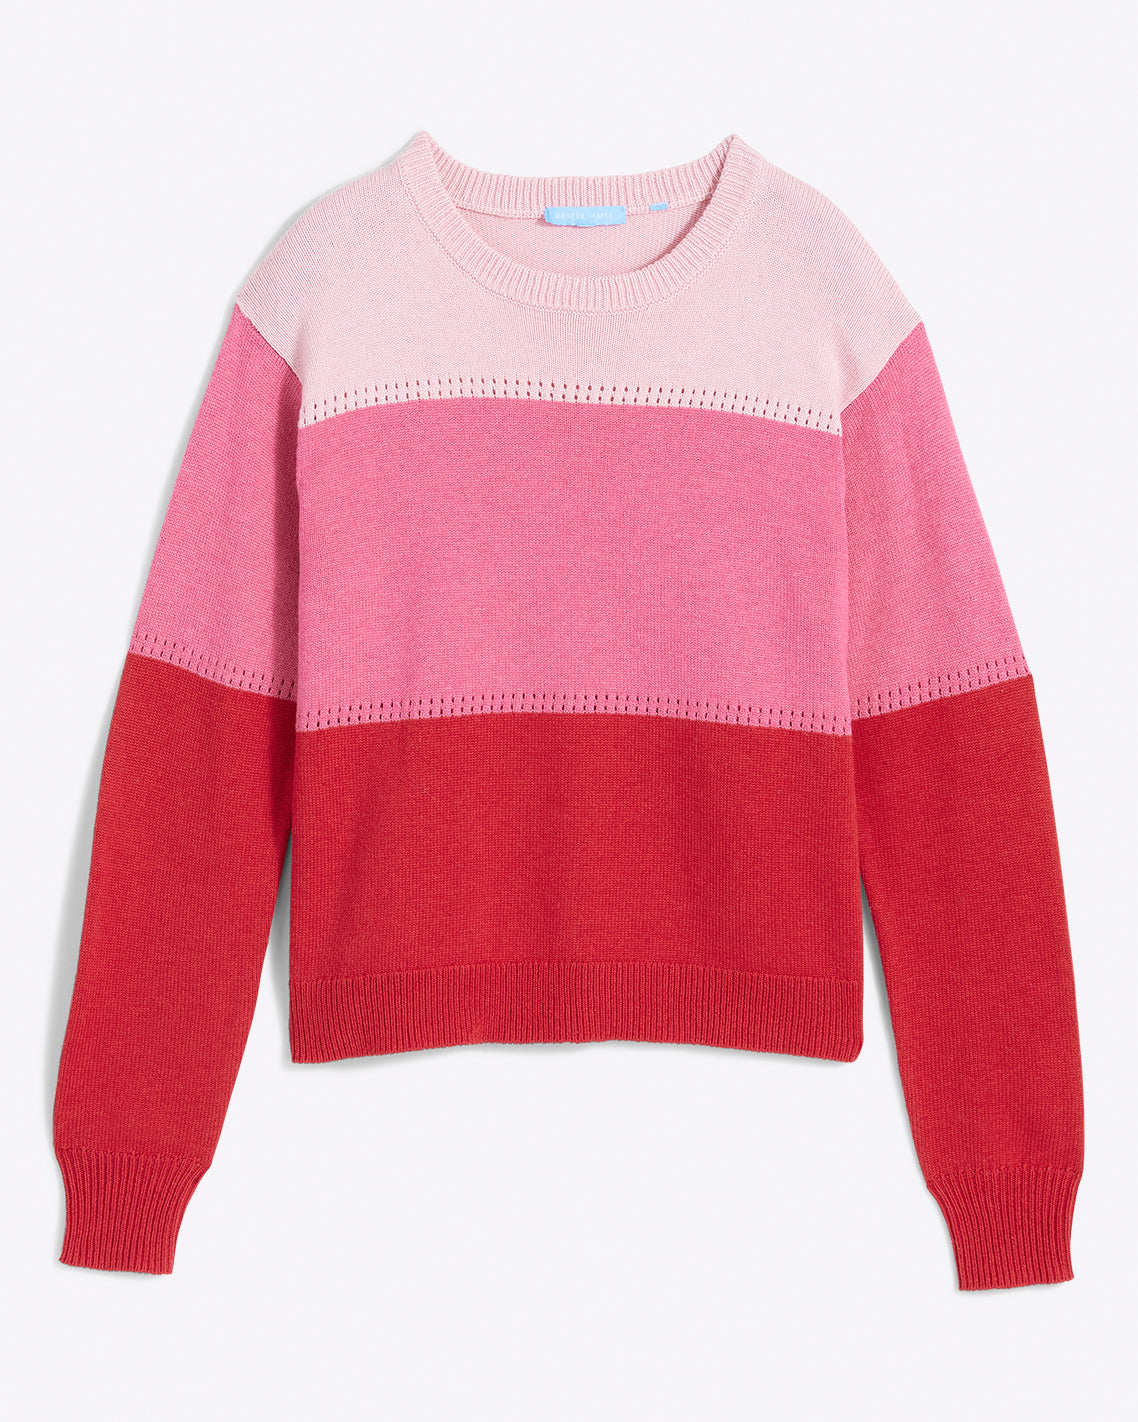 Crewneck Sweater in Pink Colorblock – Draper James